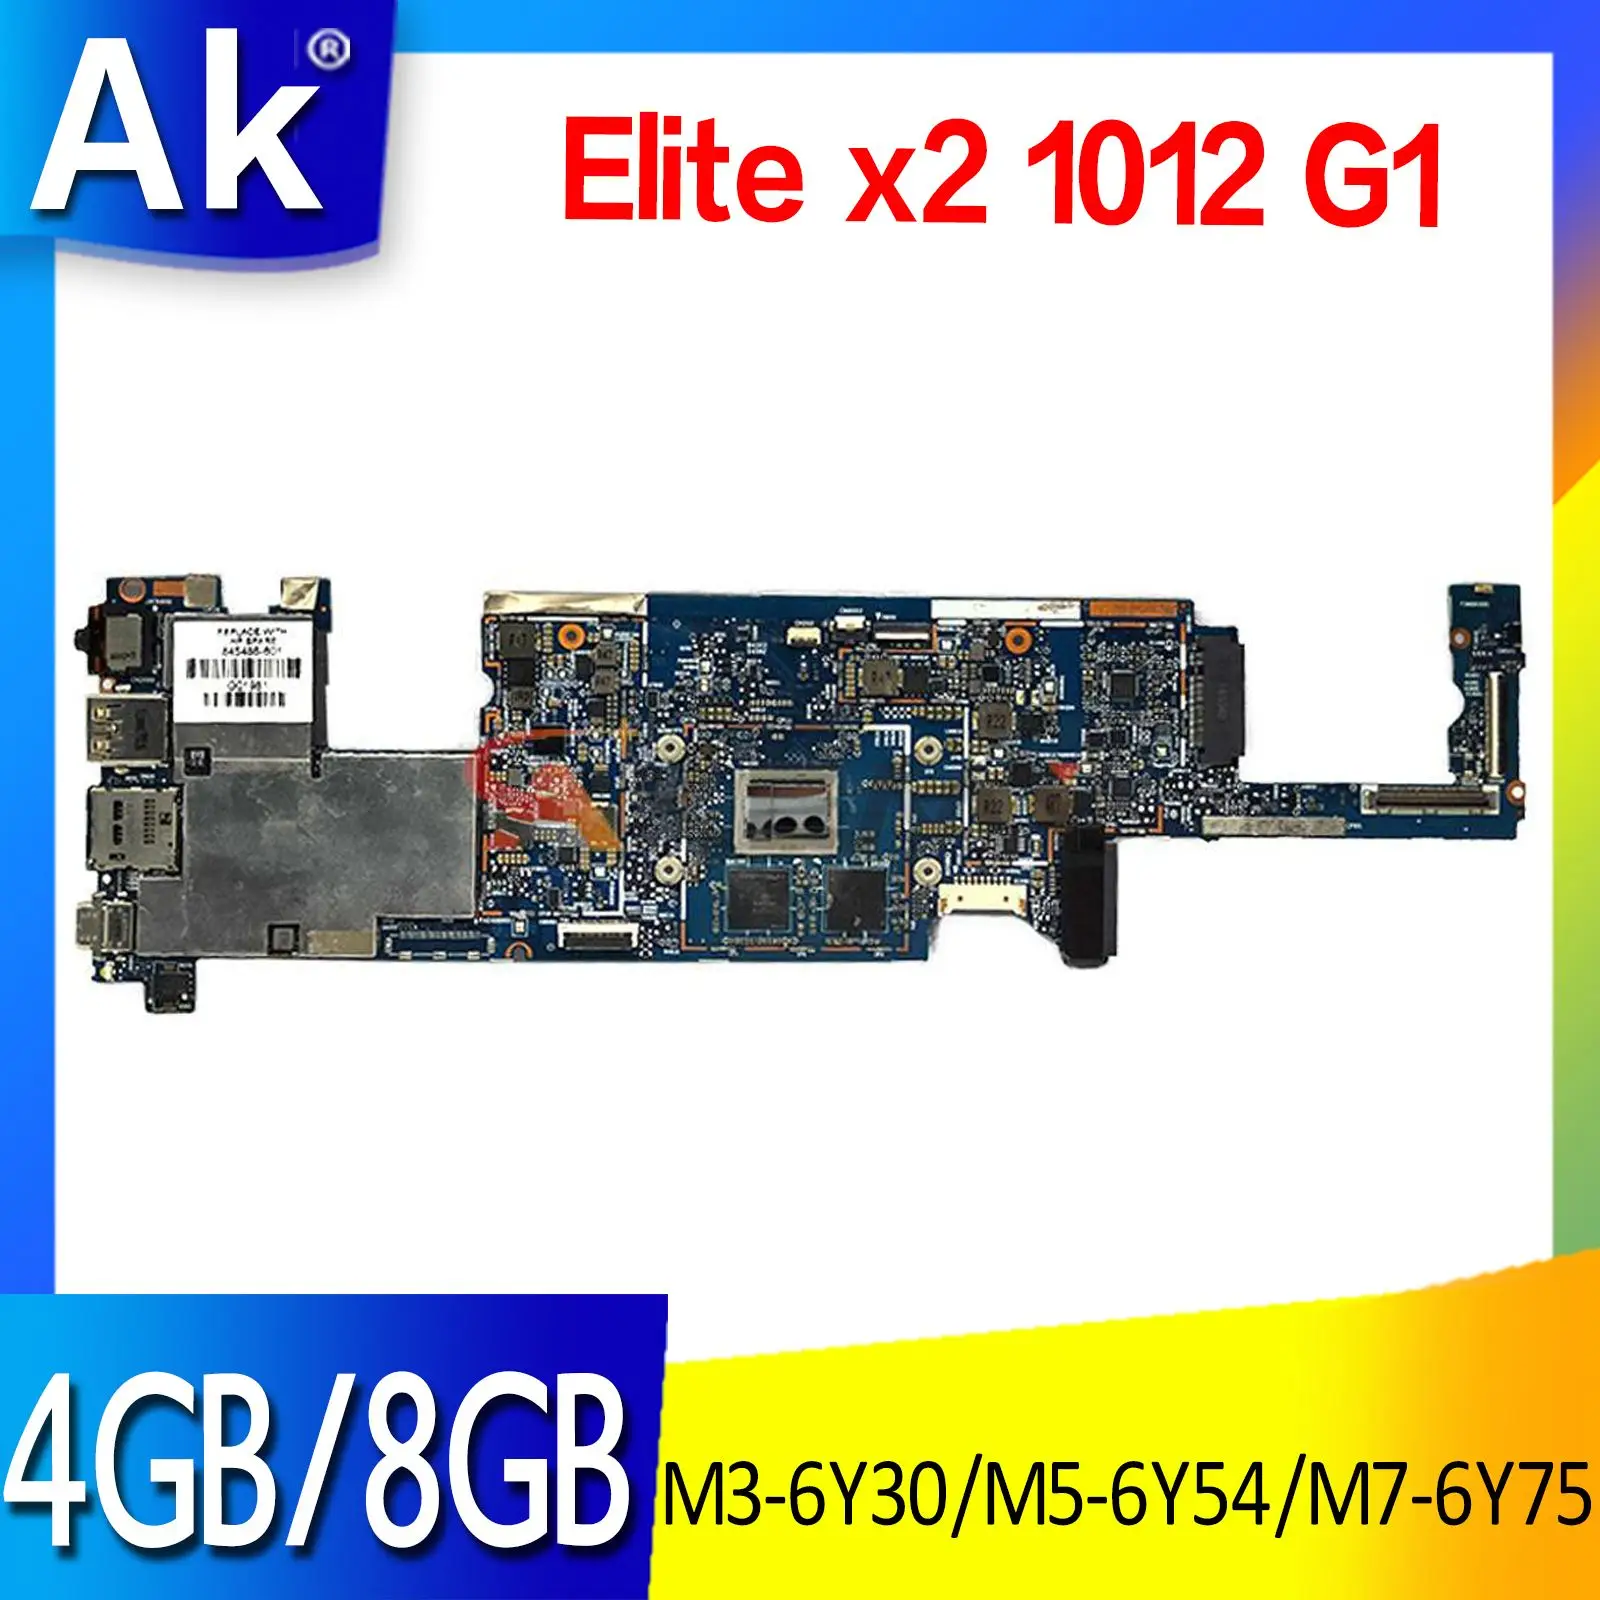 

6050A2748801 For HP Elite x2 1012 G1 Laptop motherboard M3-6Y30 M5-6Y54 M7-6Y75 CPU 4GB 8GB RMB Mainboard 845470-601 844858-601